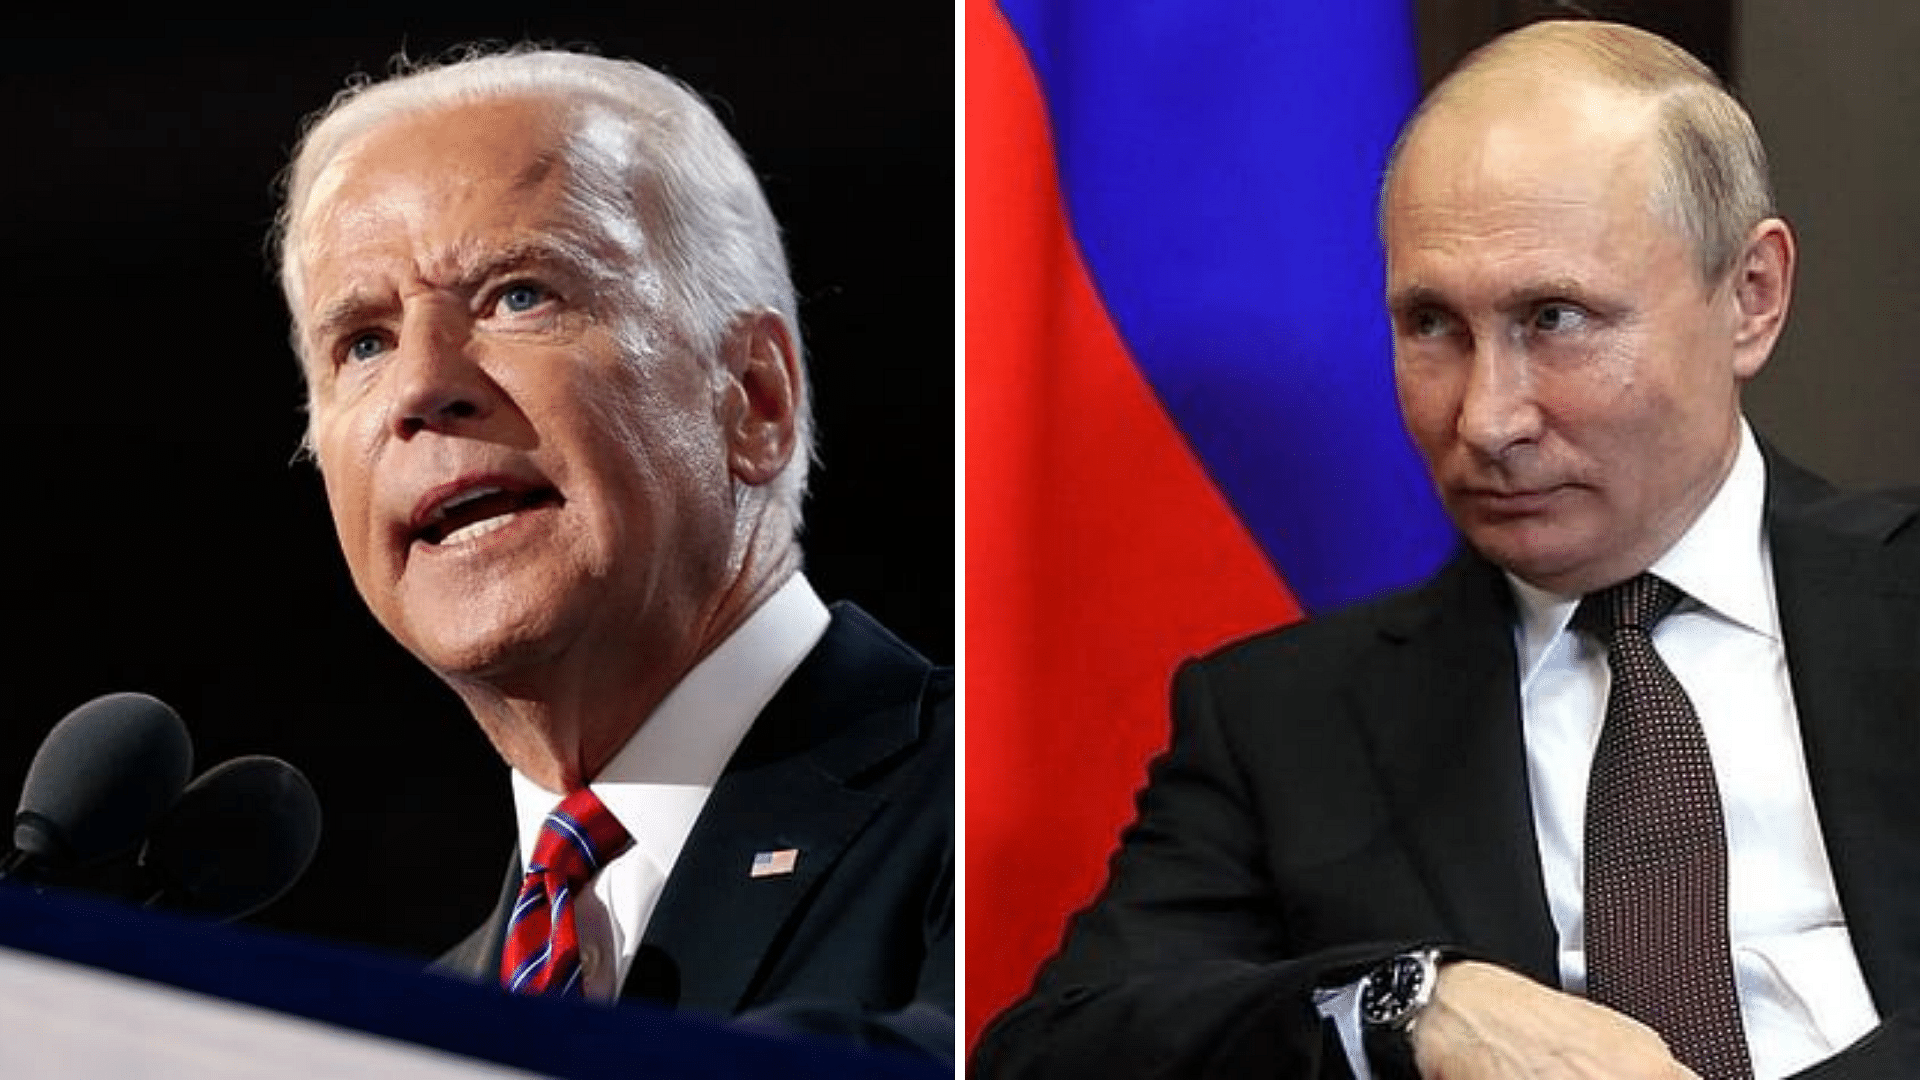 <div class="paragraphs"><p>US president Joe Biden and Russian President Vladimir Putin. Image used for representative purposes.&nbsp;</p></div>